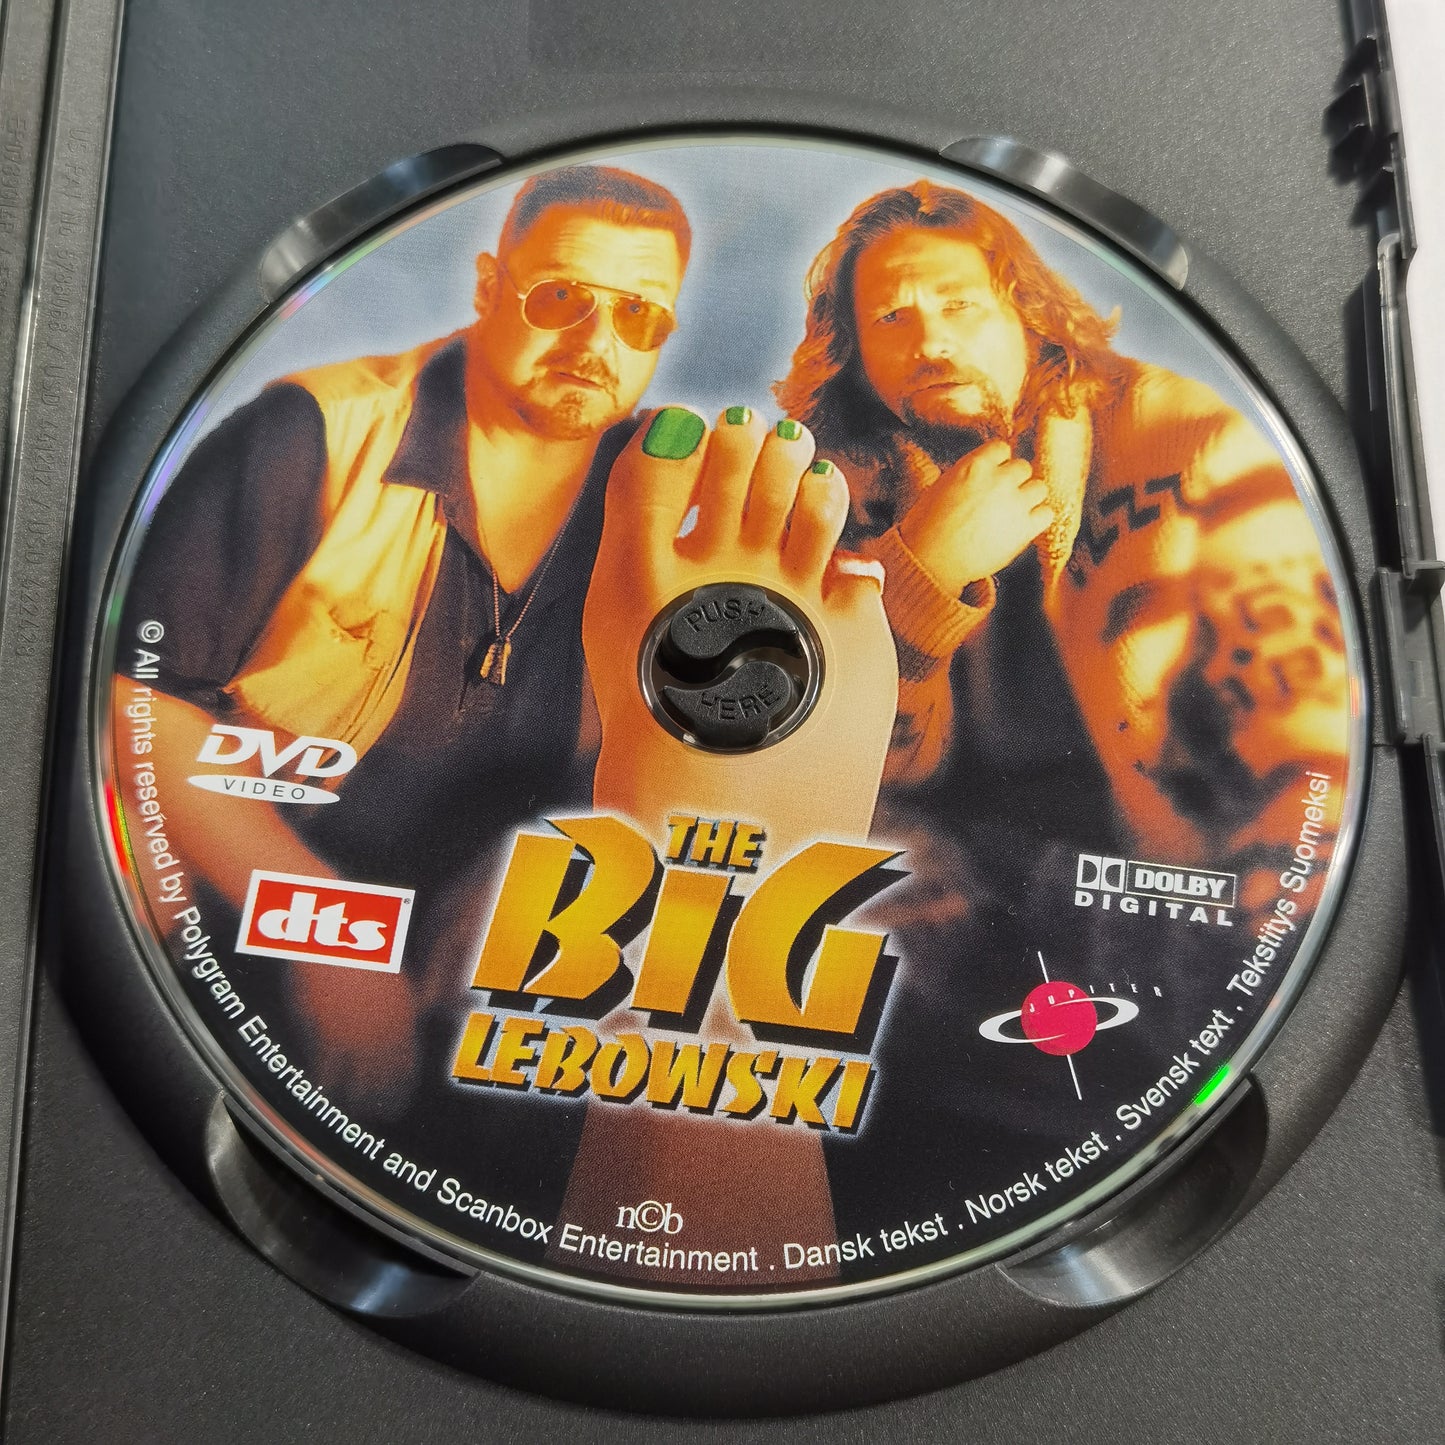 The Big Lebowski (1998) - DVD SE NO DK FI New Edition